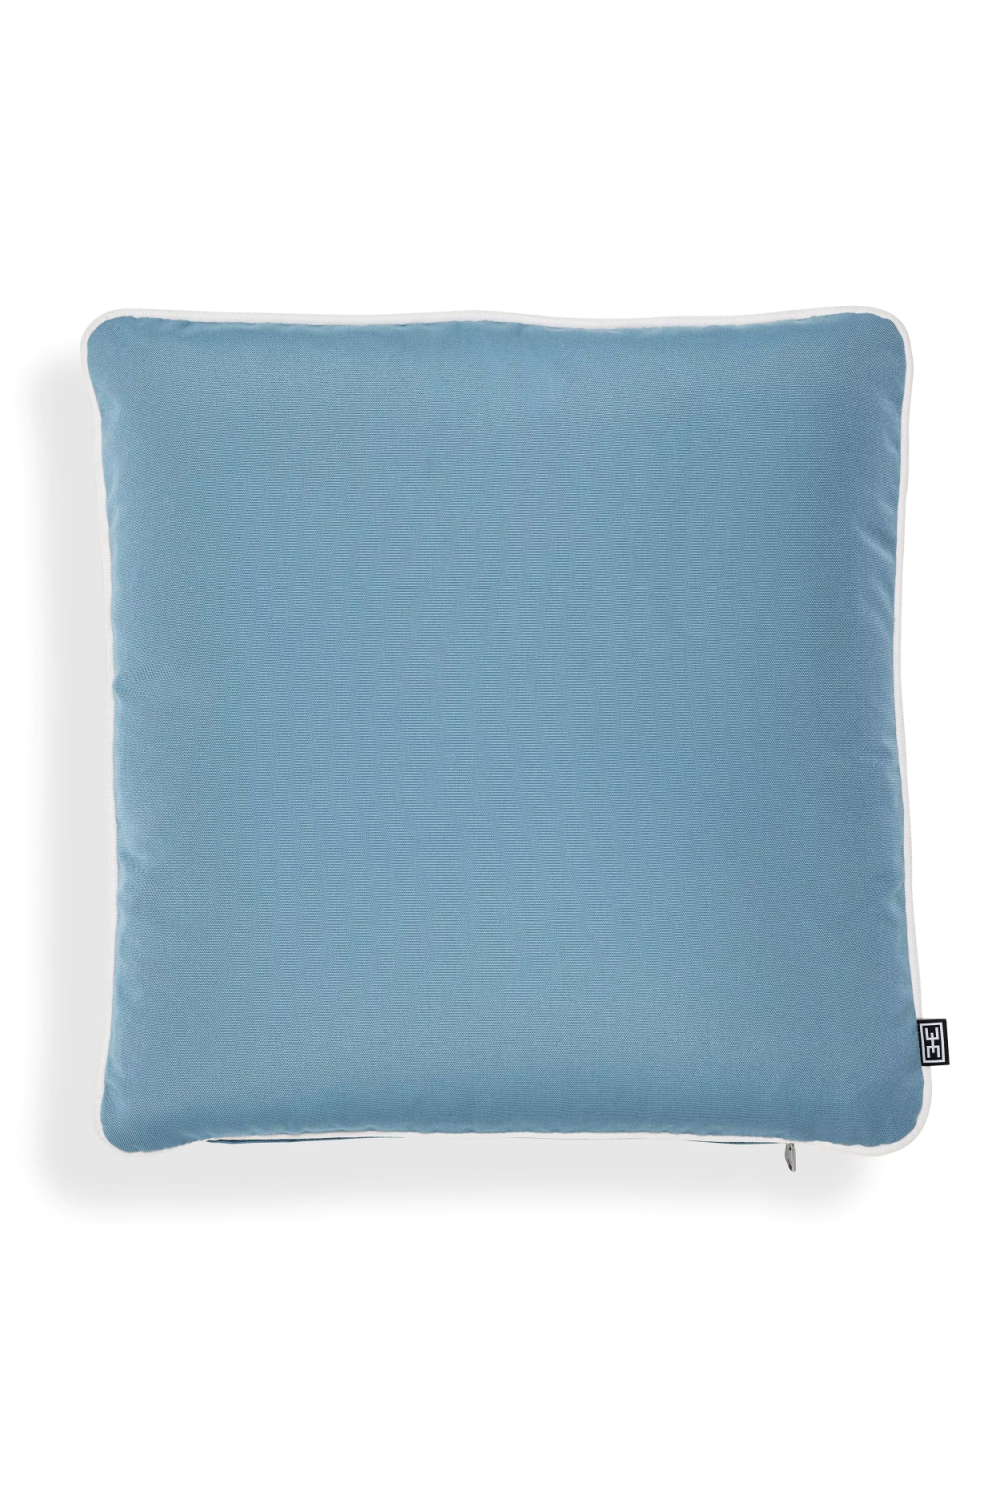 Minimalist Outdoor Cushion | Eichholtz Universal | Oroa.com